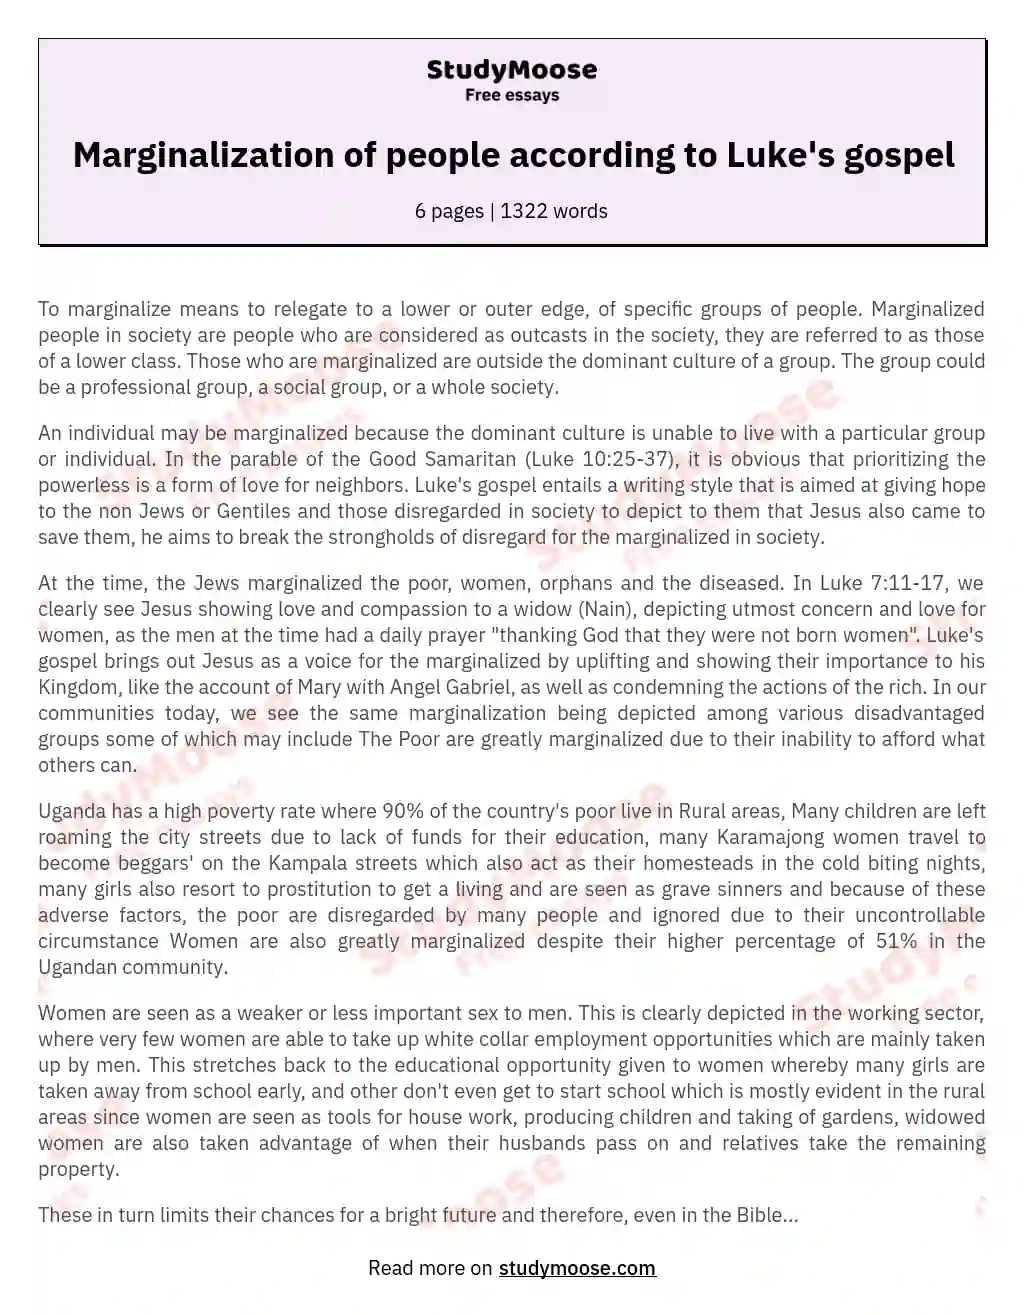 Marginalization of people according to Luke's gospel essay